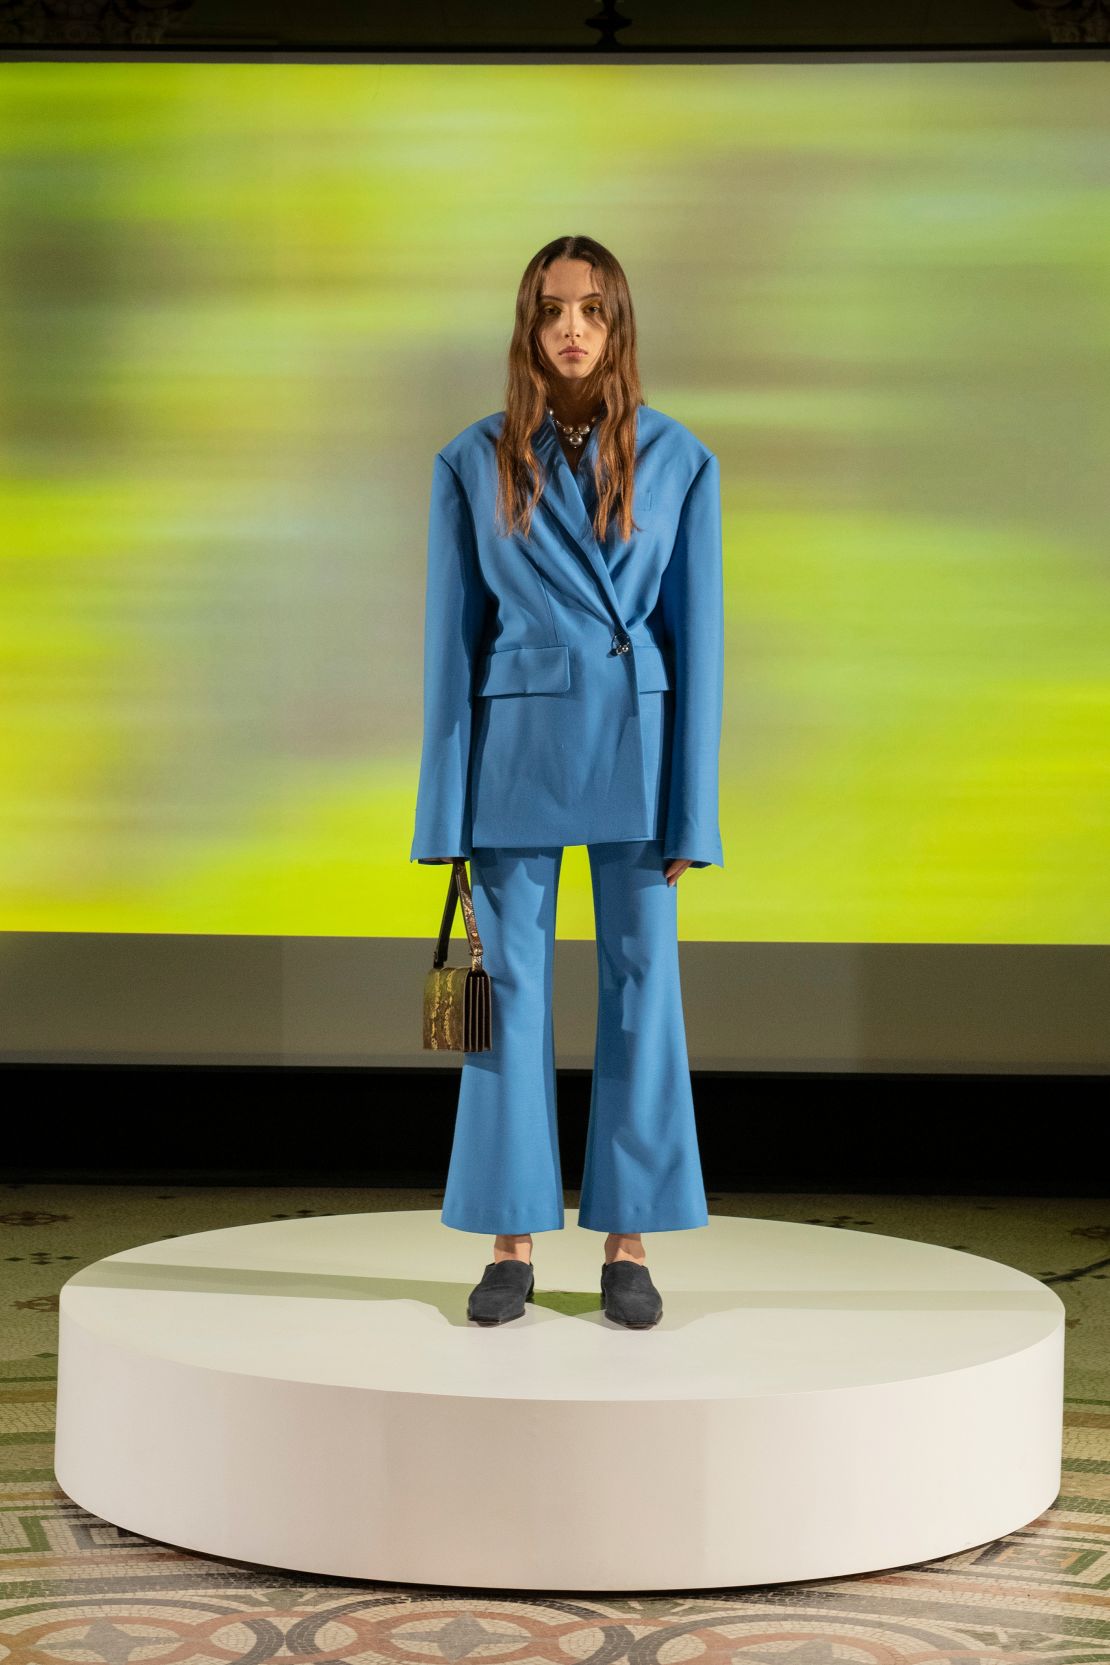 Fashion doesn't matter now': Balenciaga pays tribute to Ukraine's refugees, Paris fashion week